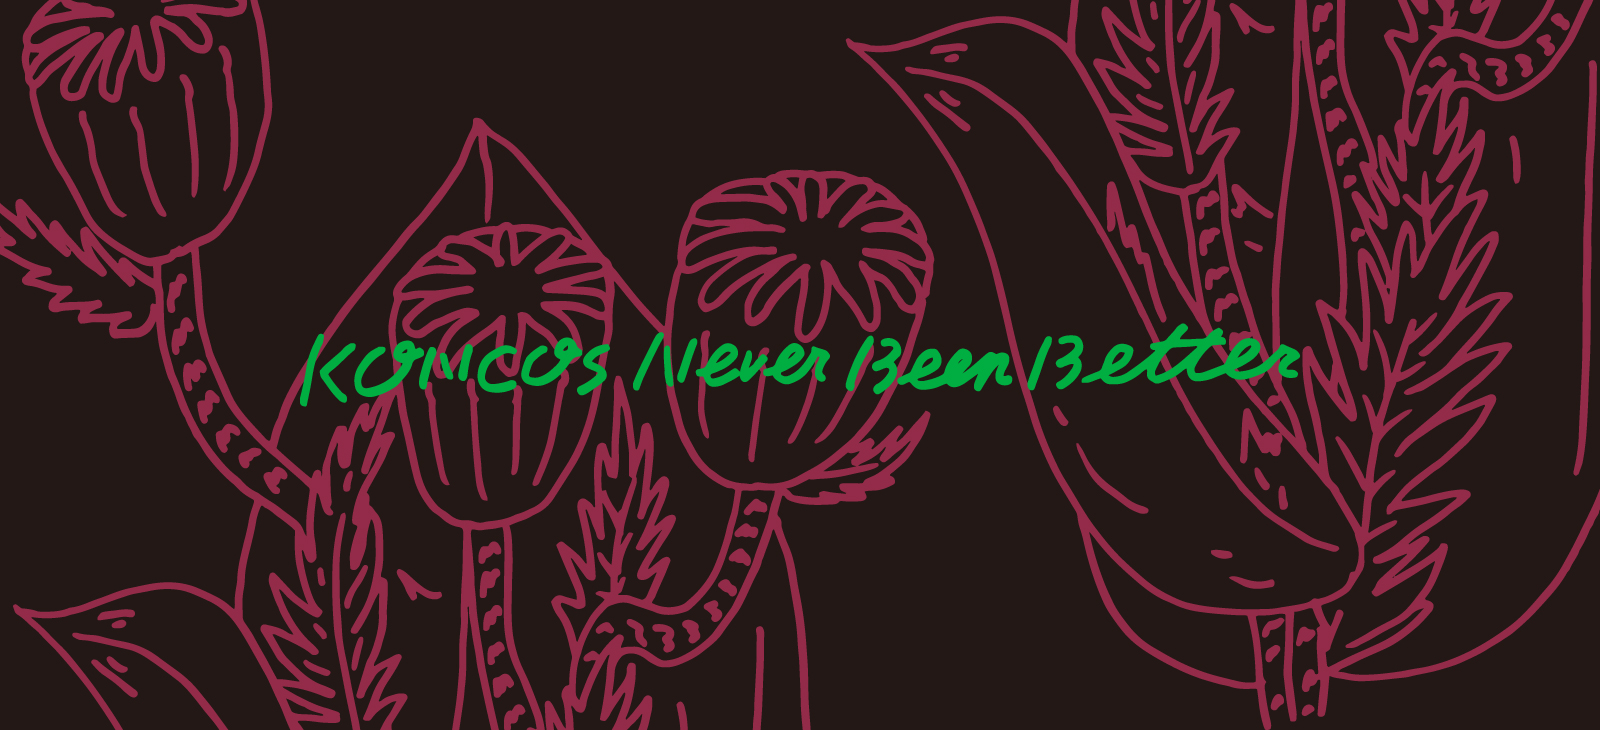 KONCOS | Never Been Better